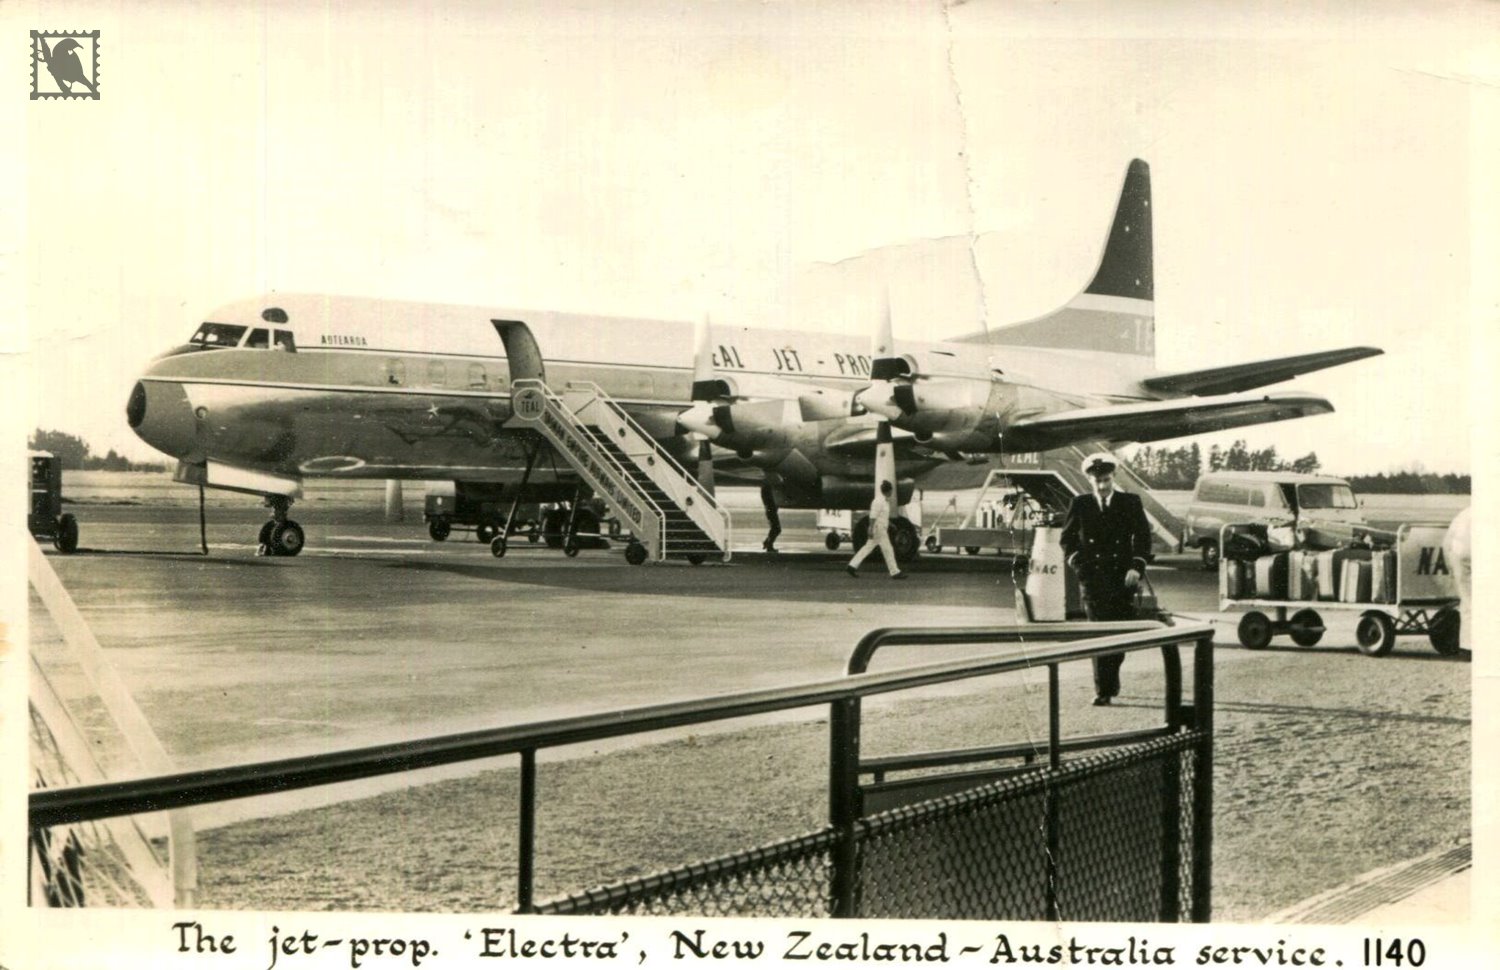 Christchurch Airport - The Jet-Prop "Electra"